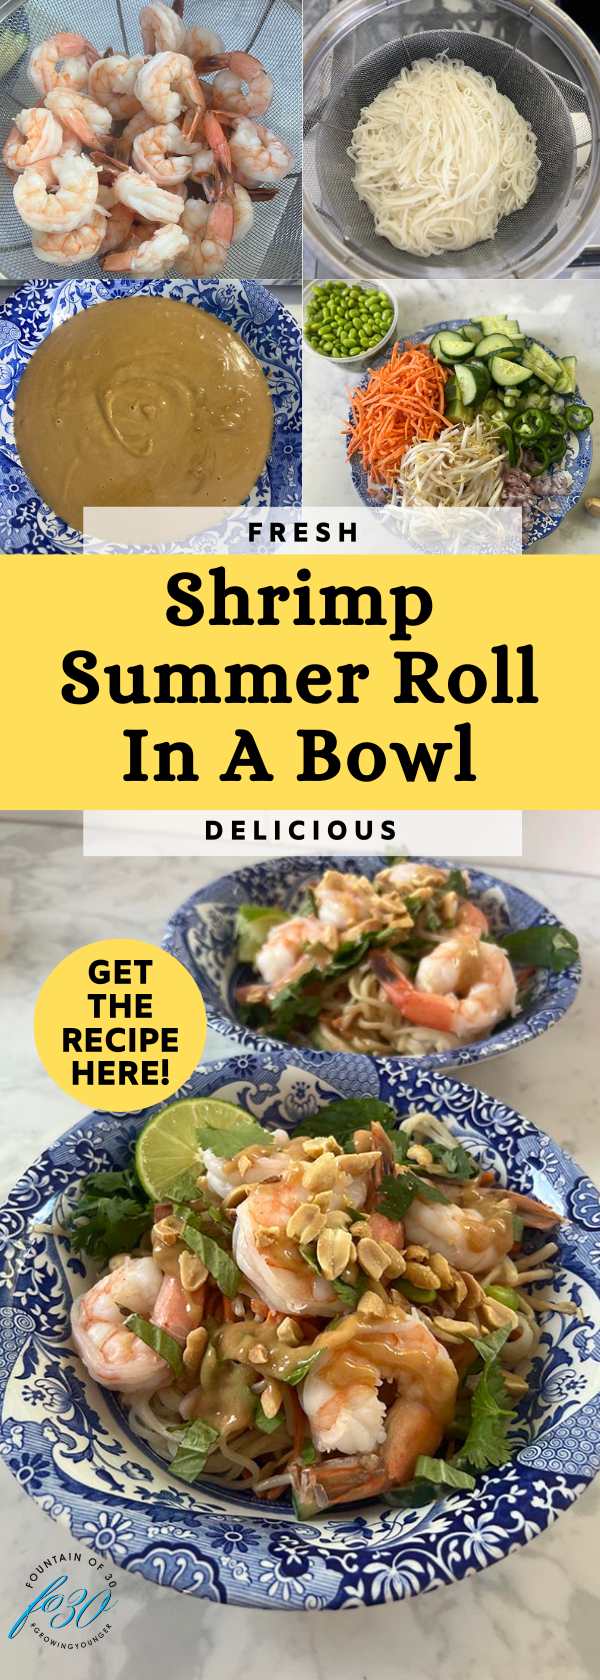 fresh shrimp summer roll in a bowl fountainof30